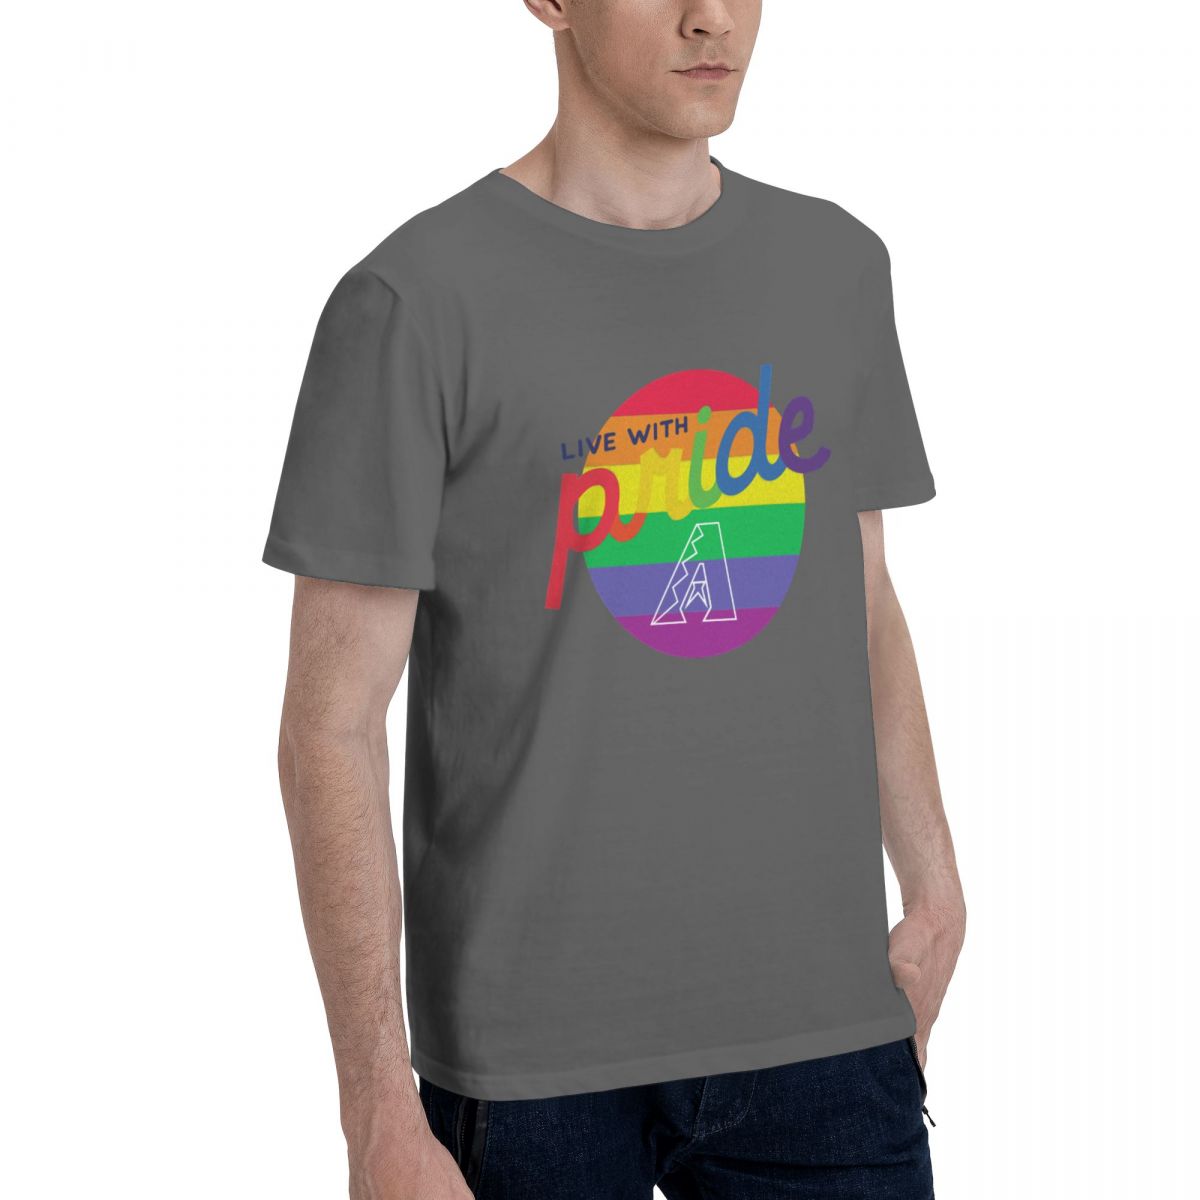 Arizona Diamondbacks Round LGBT Lettering Men's Cotton Shirt